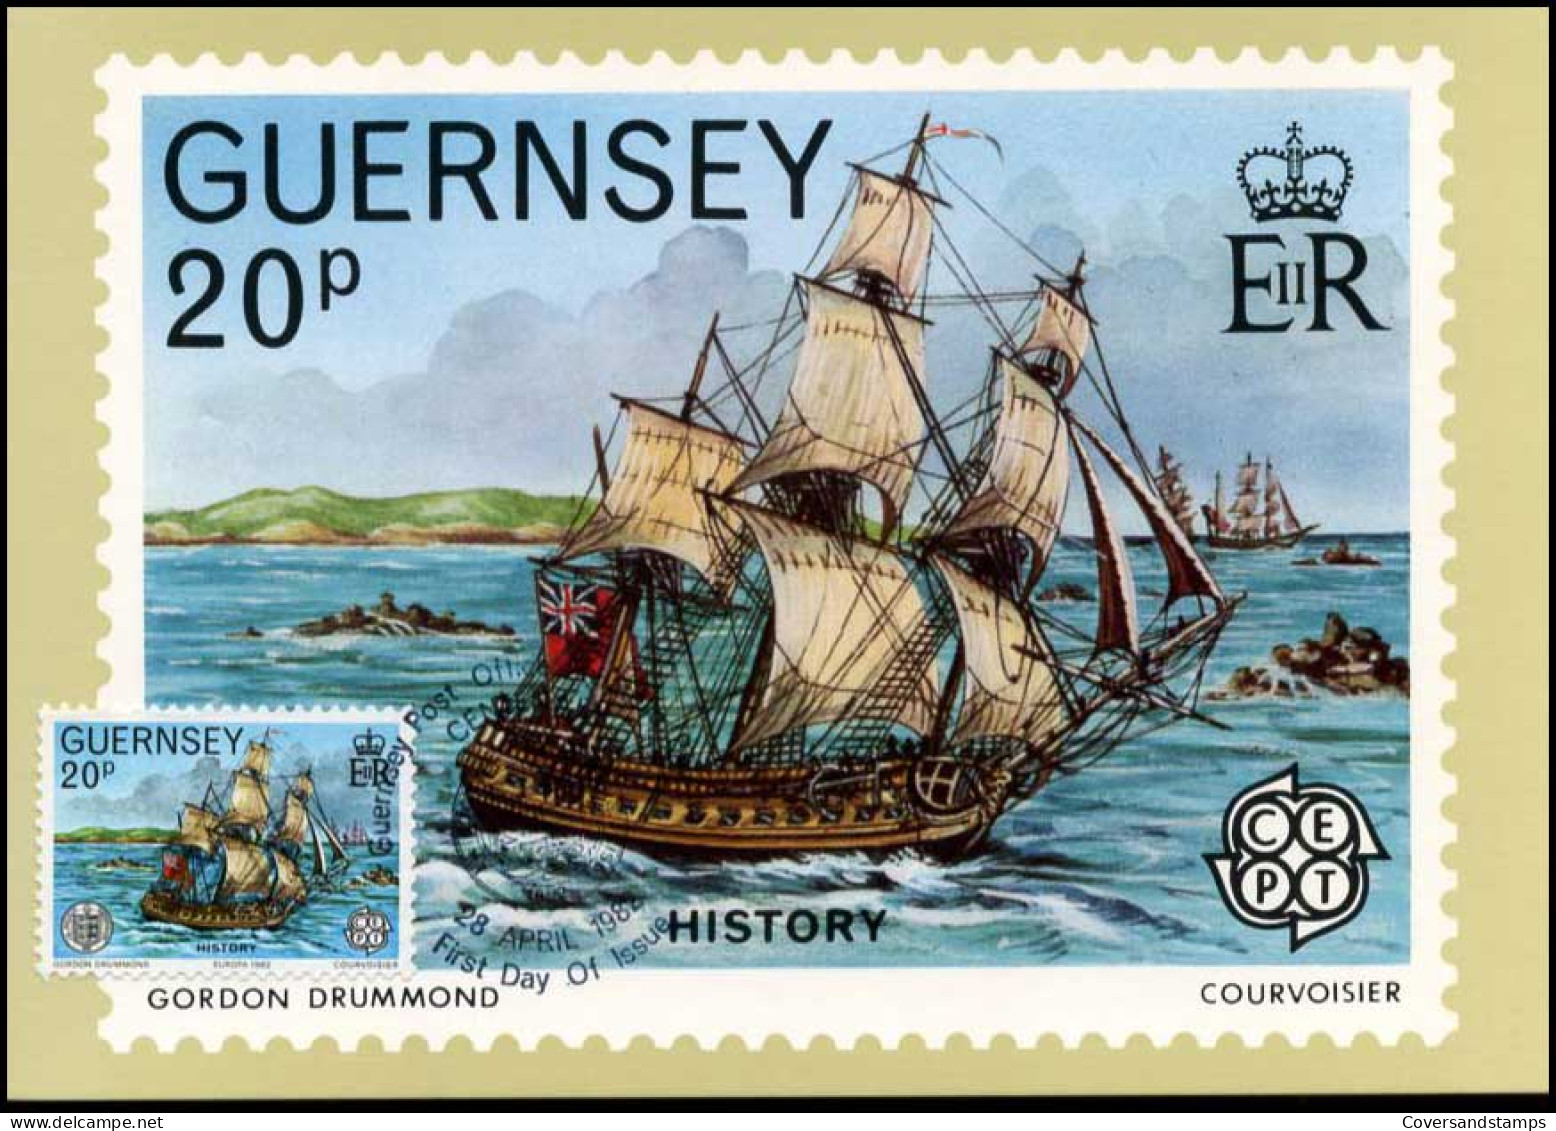  Guernsey - MK -  Europa 1982 - Guernesey